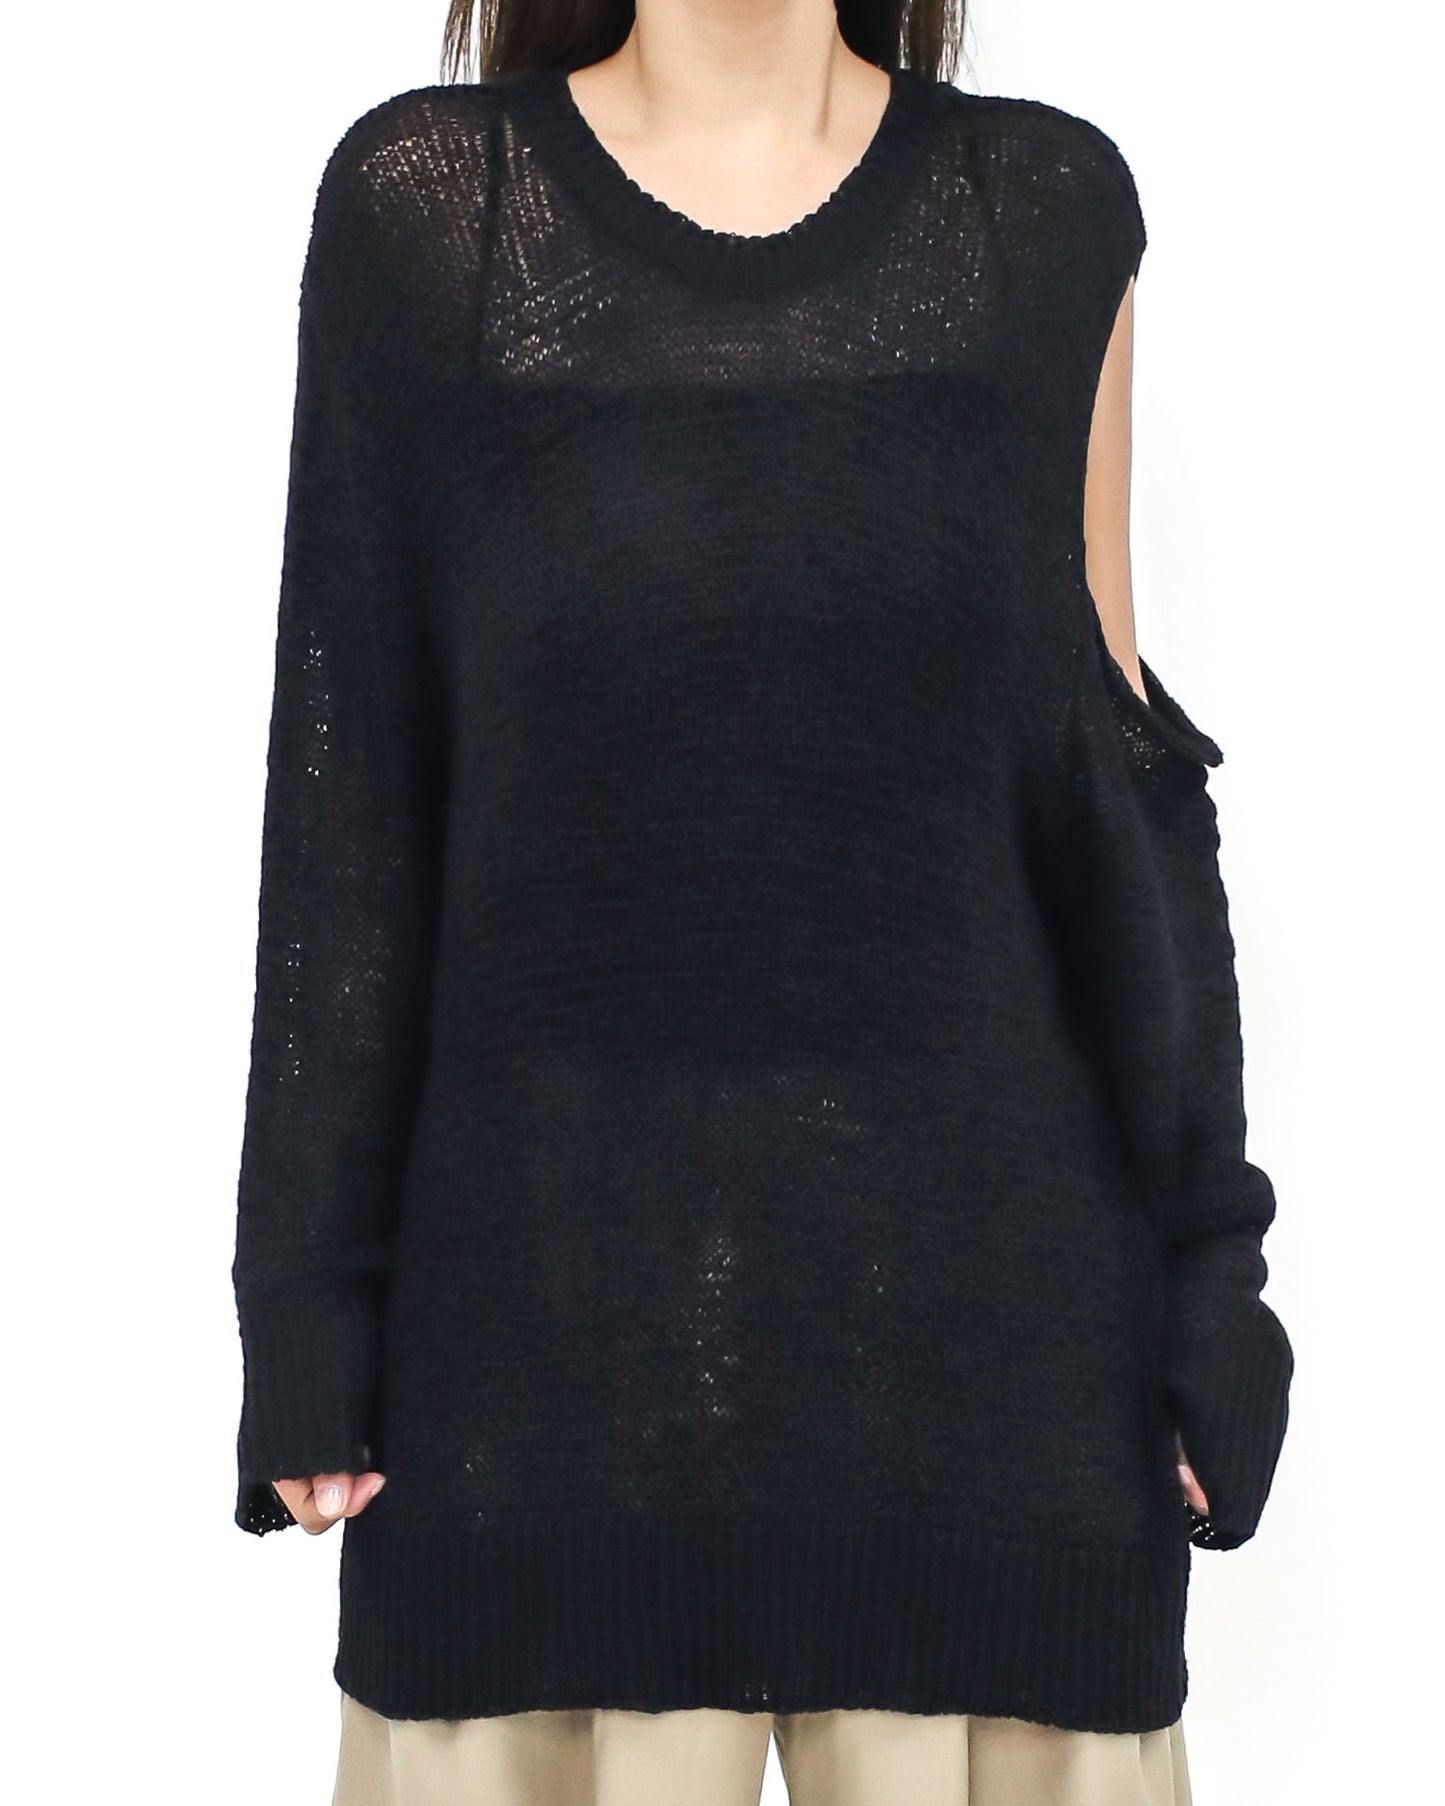 black cutout shoulder & back soft knitted top *pre-order*